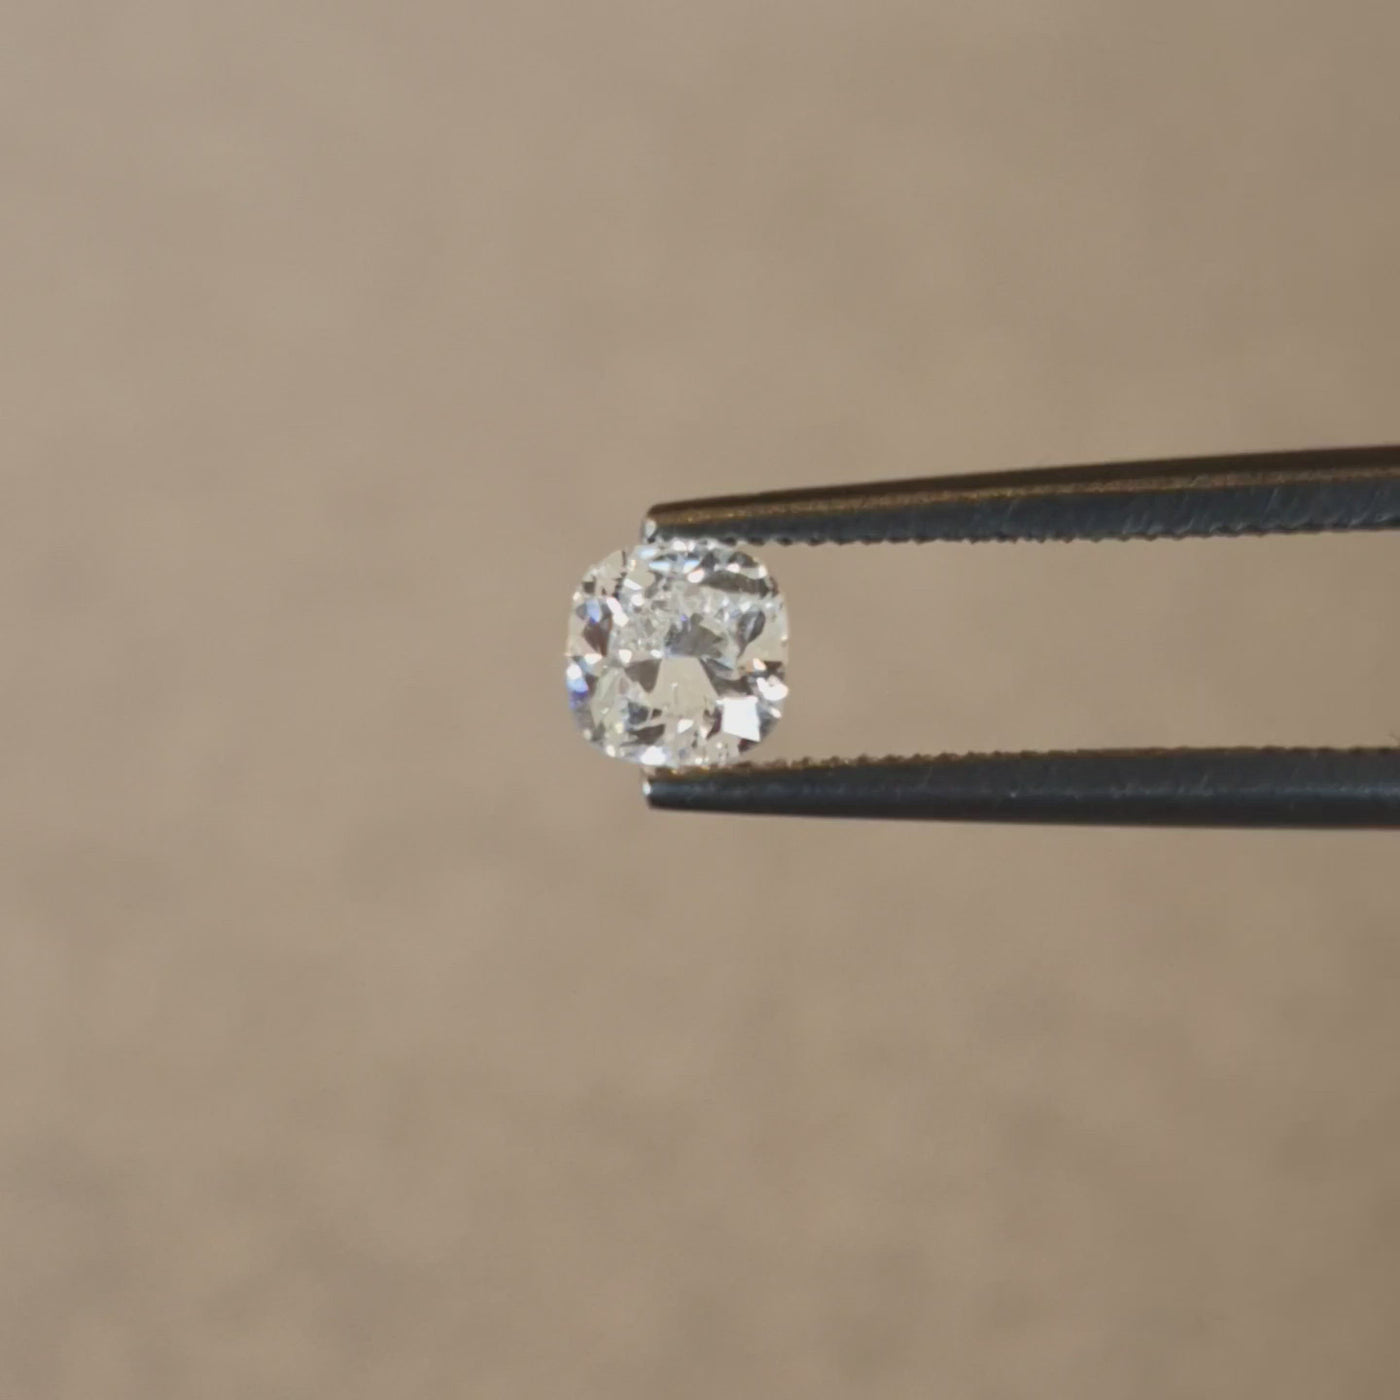 0.51ct Australian Argyle Diamond - Cushion Cut